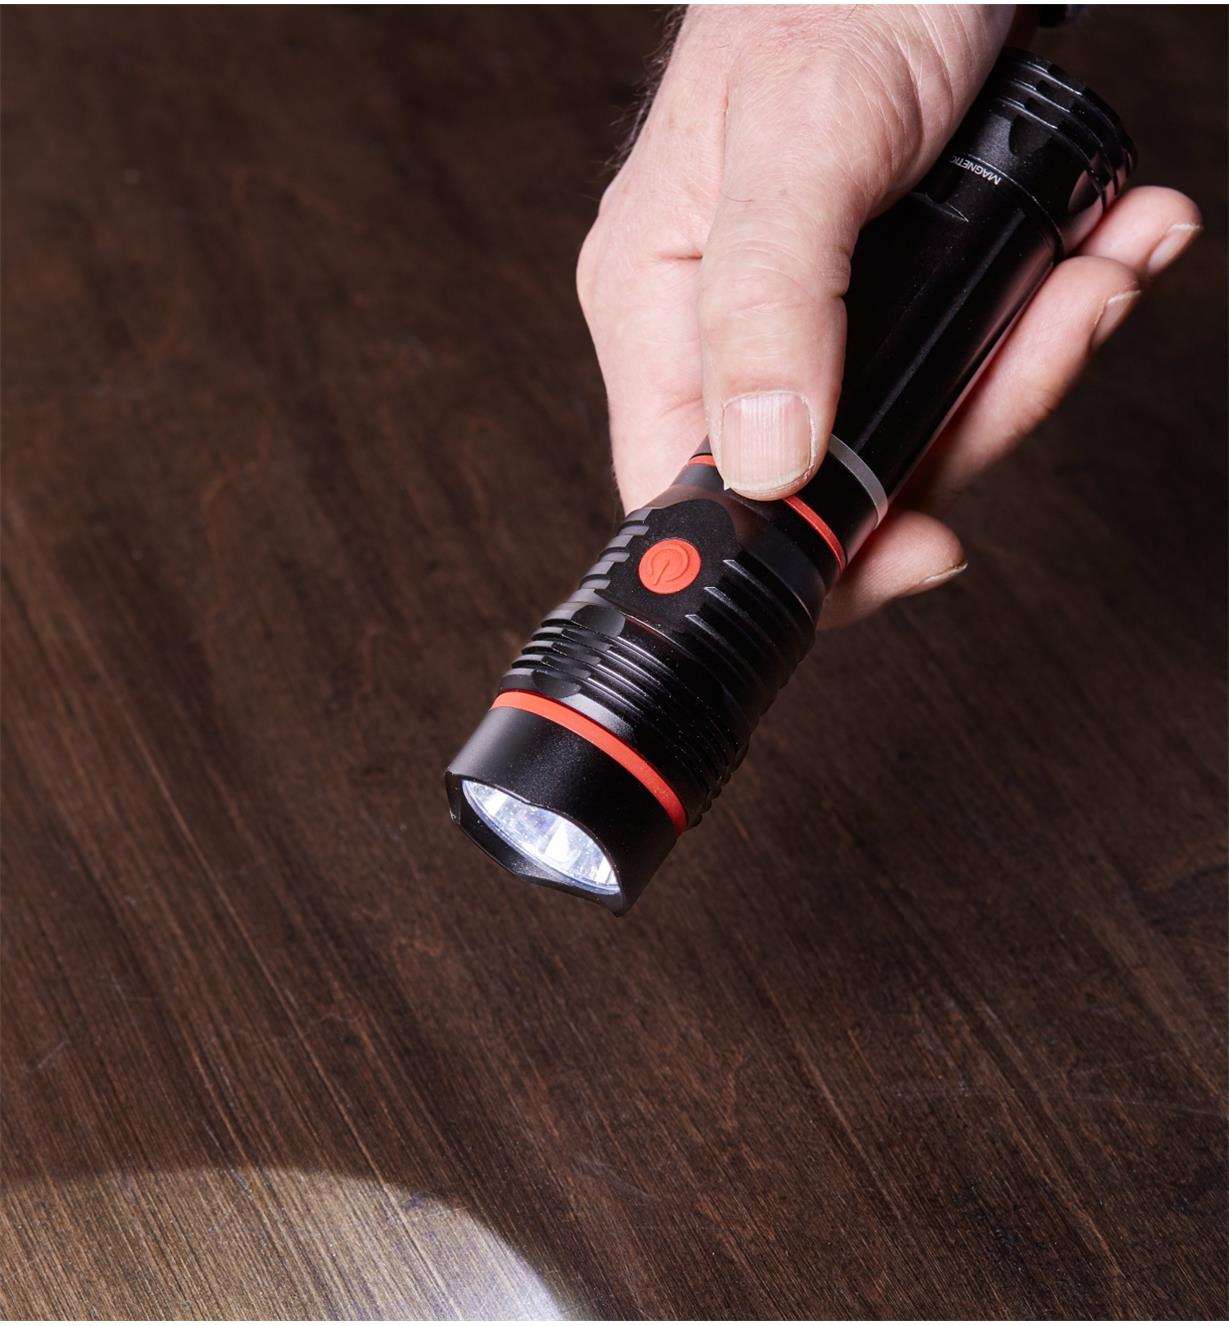 Magnet-Mount LED Task Light/Flashlight used as a handheld flashlight